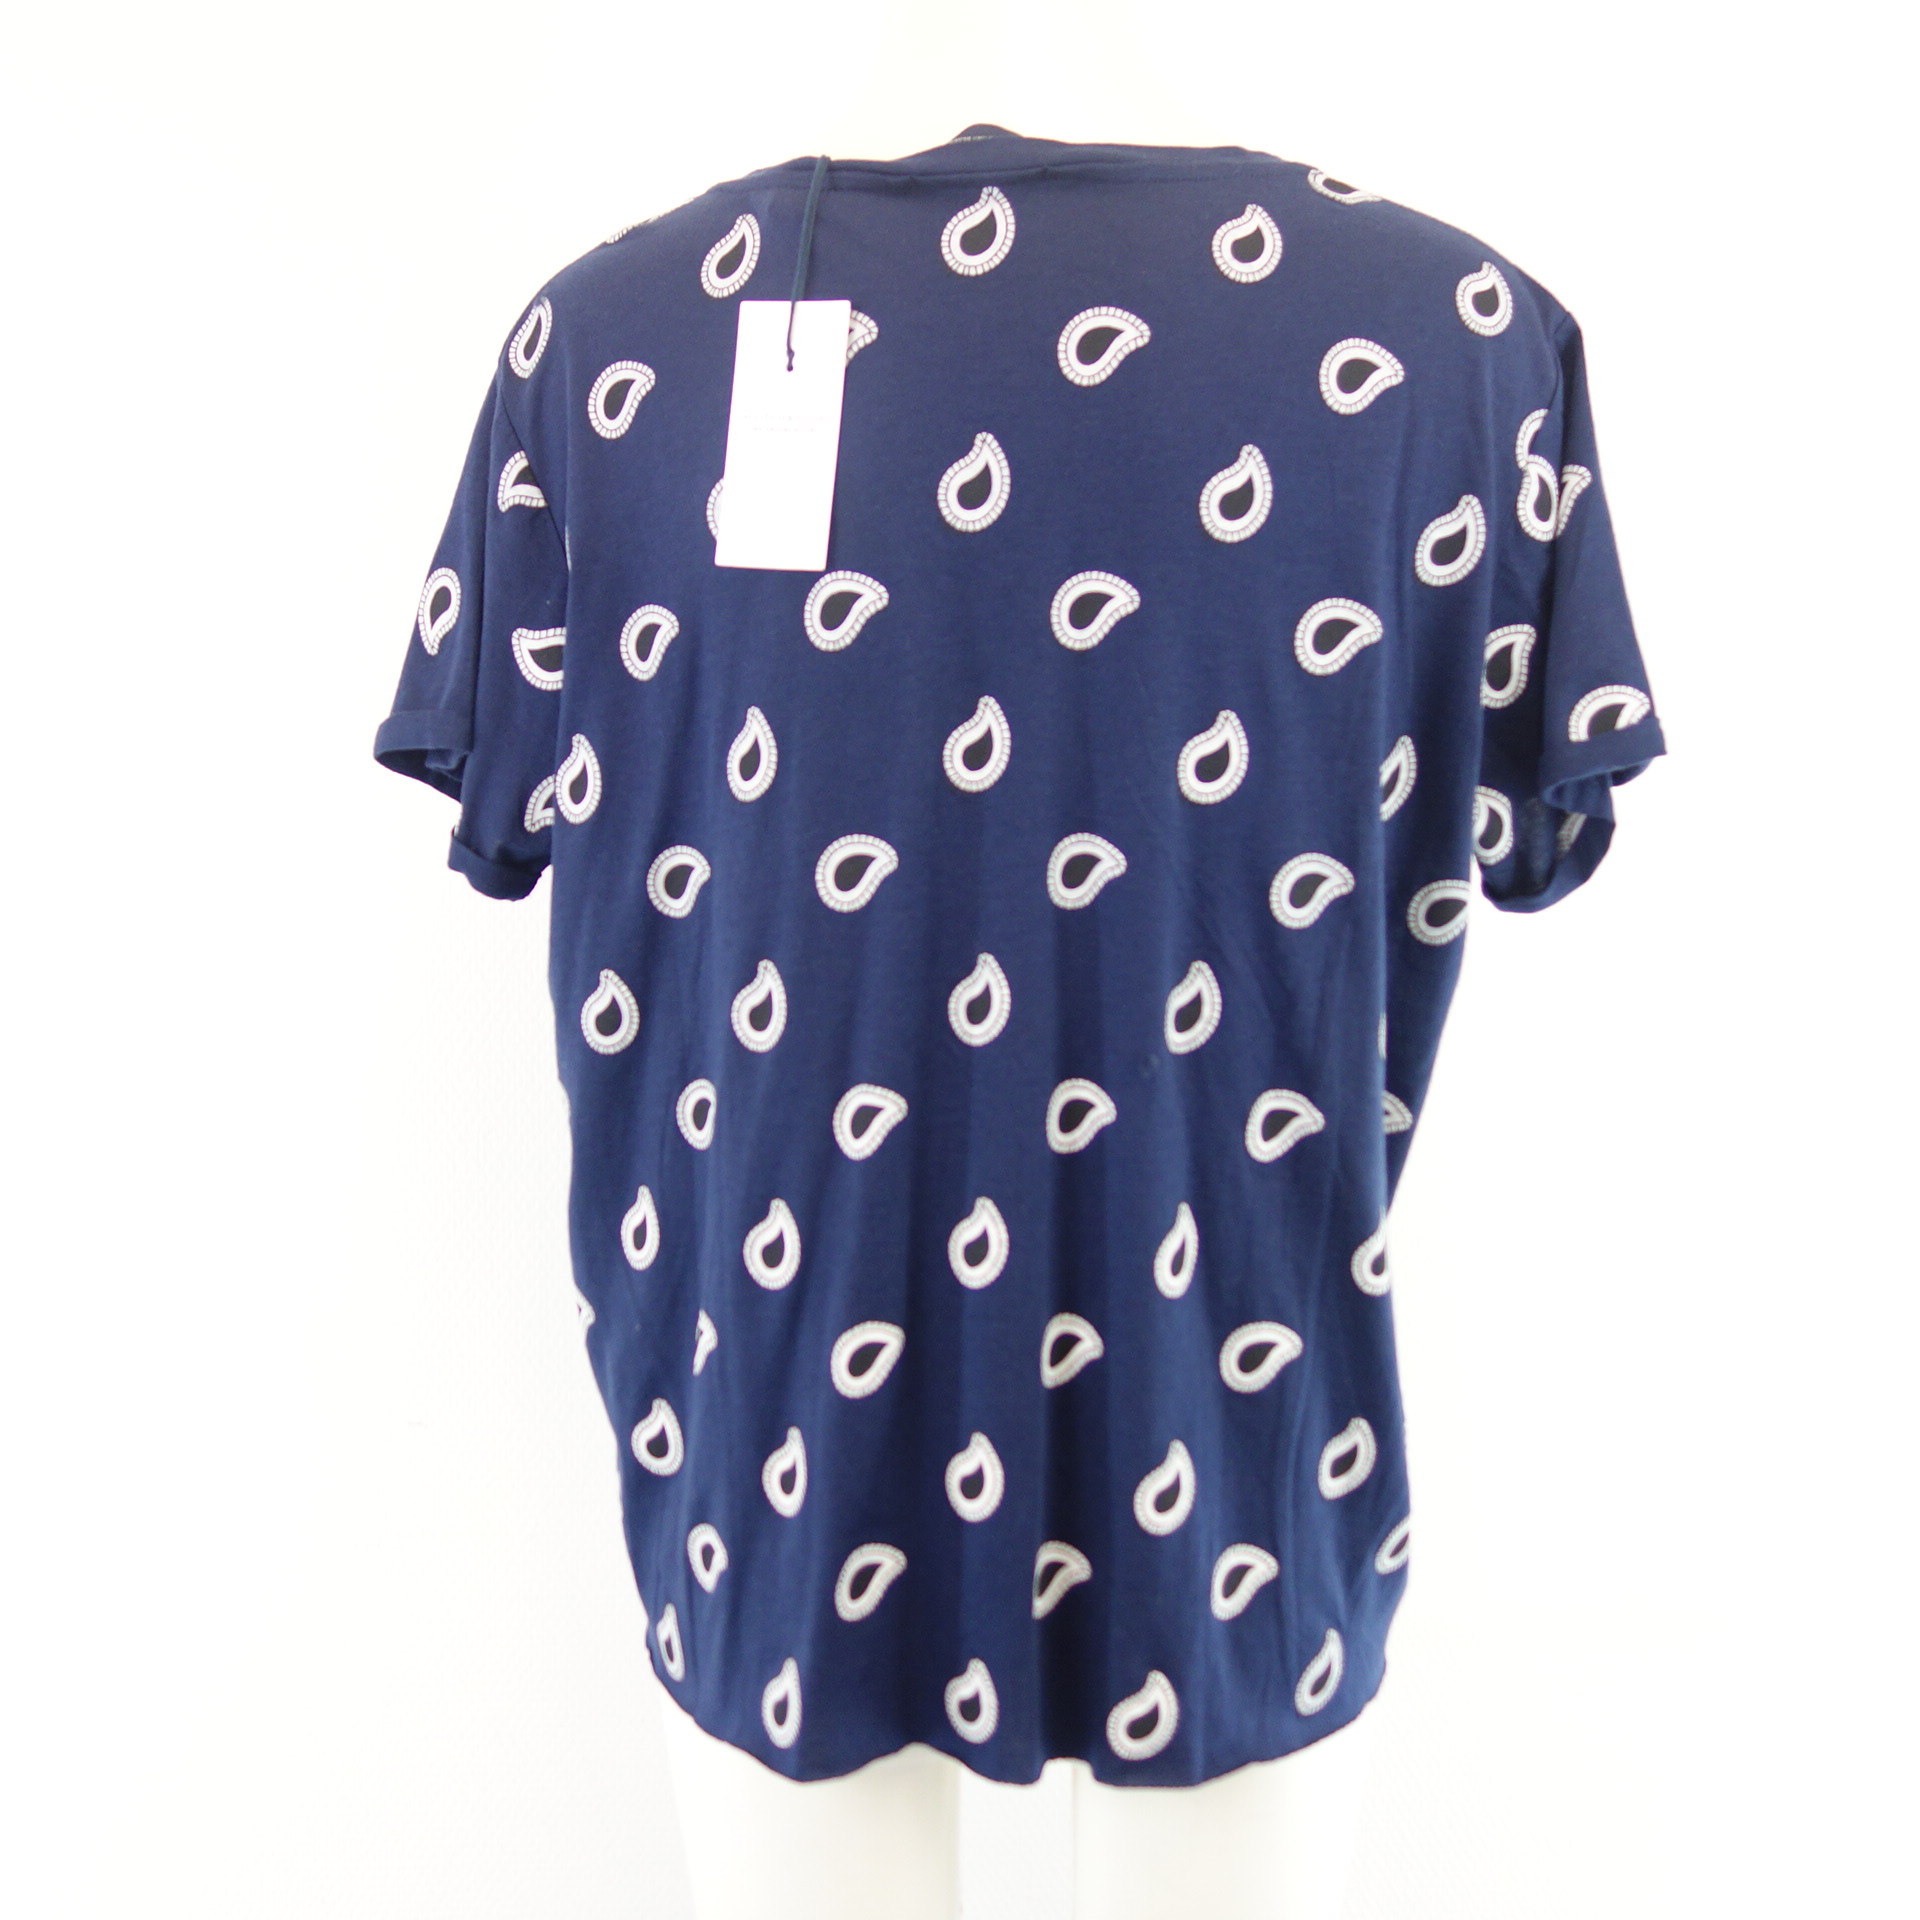 SCOTCH & SODA T-Shirt Blau Weiß Paisley Muster Baumwolle Modal